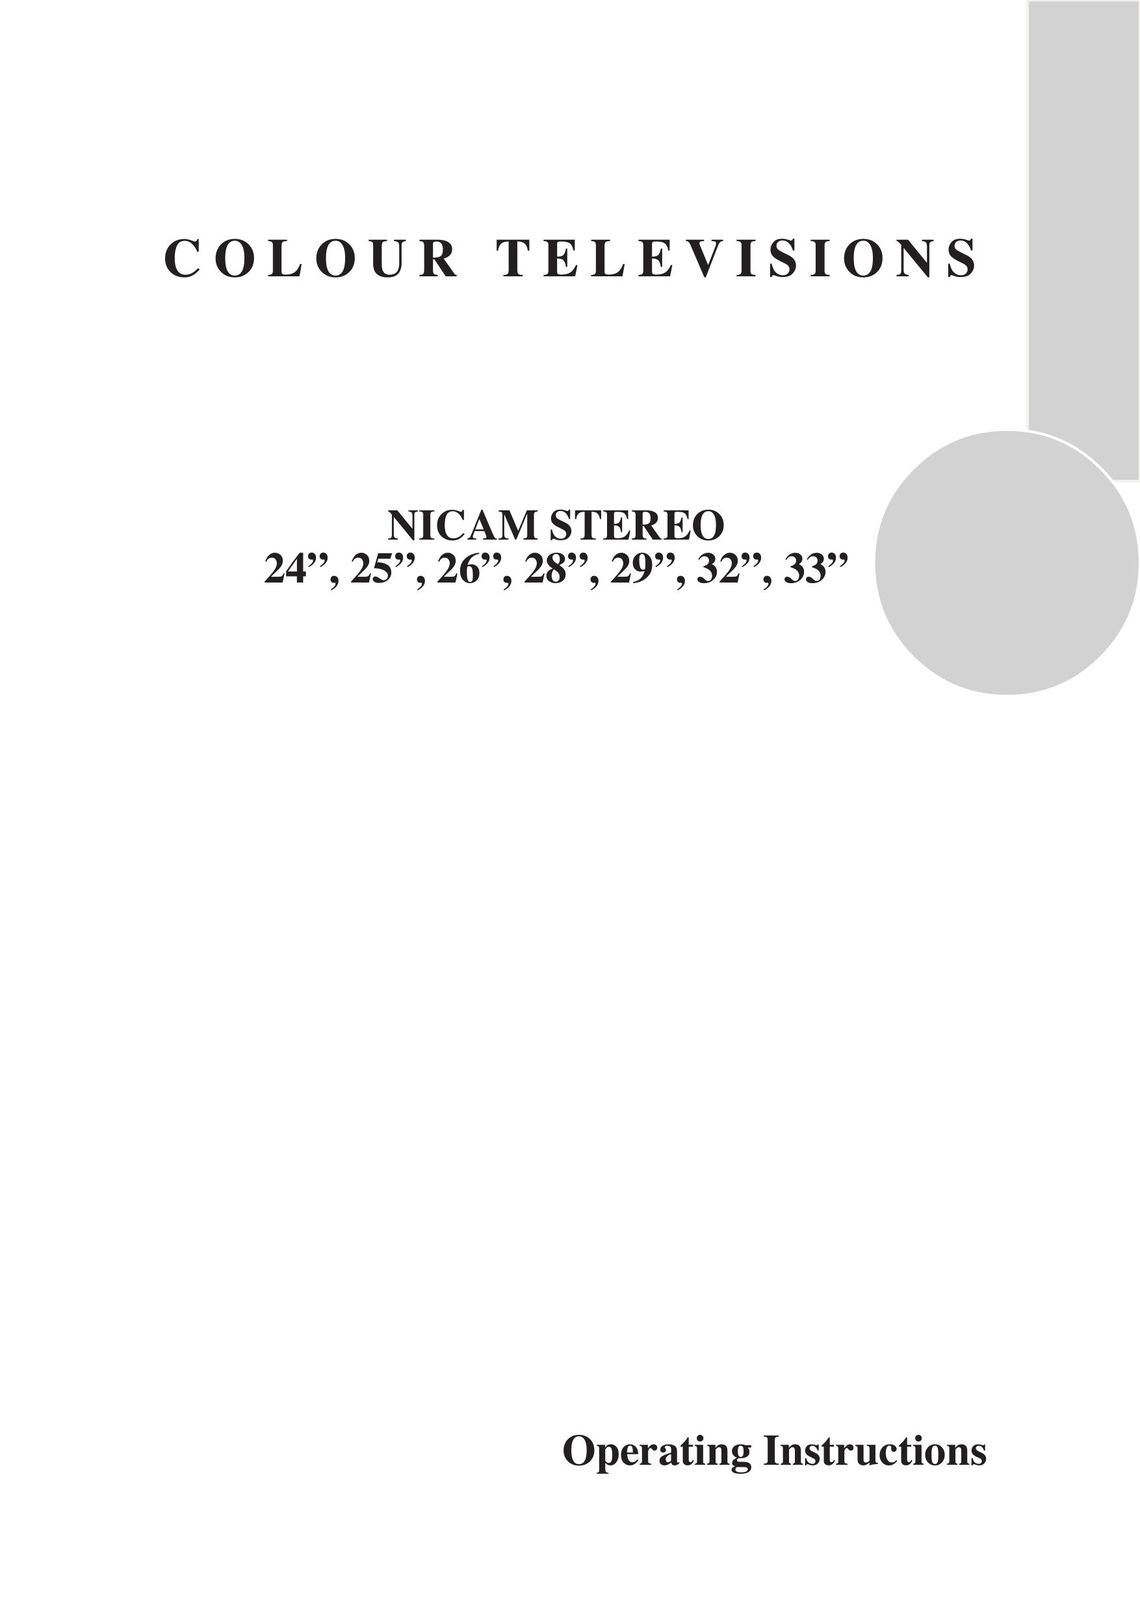 Beko 24" CRT Television User Manual